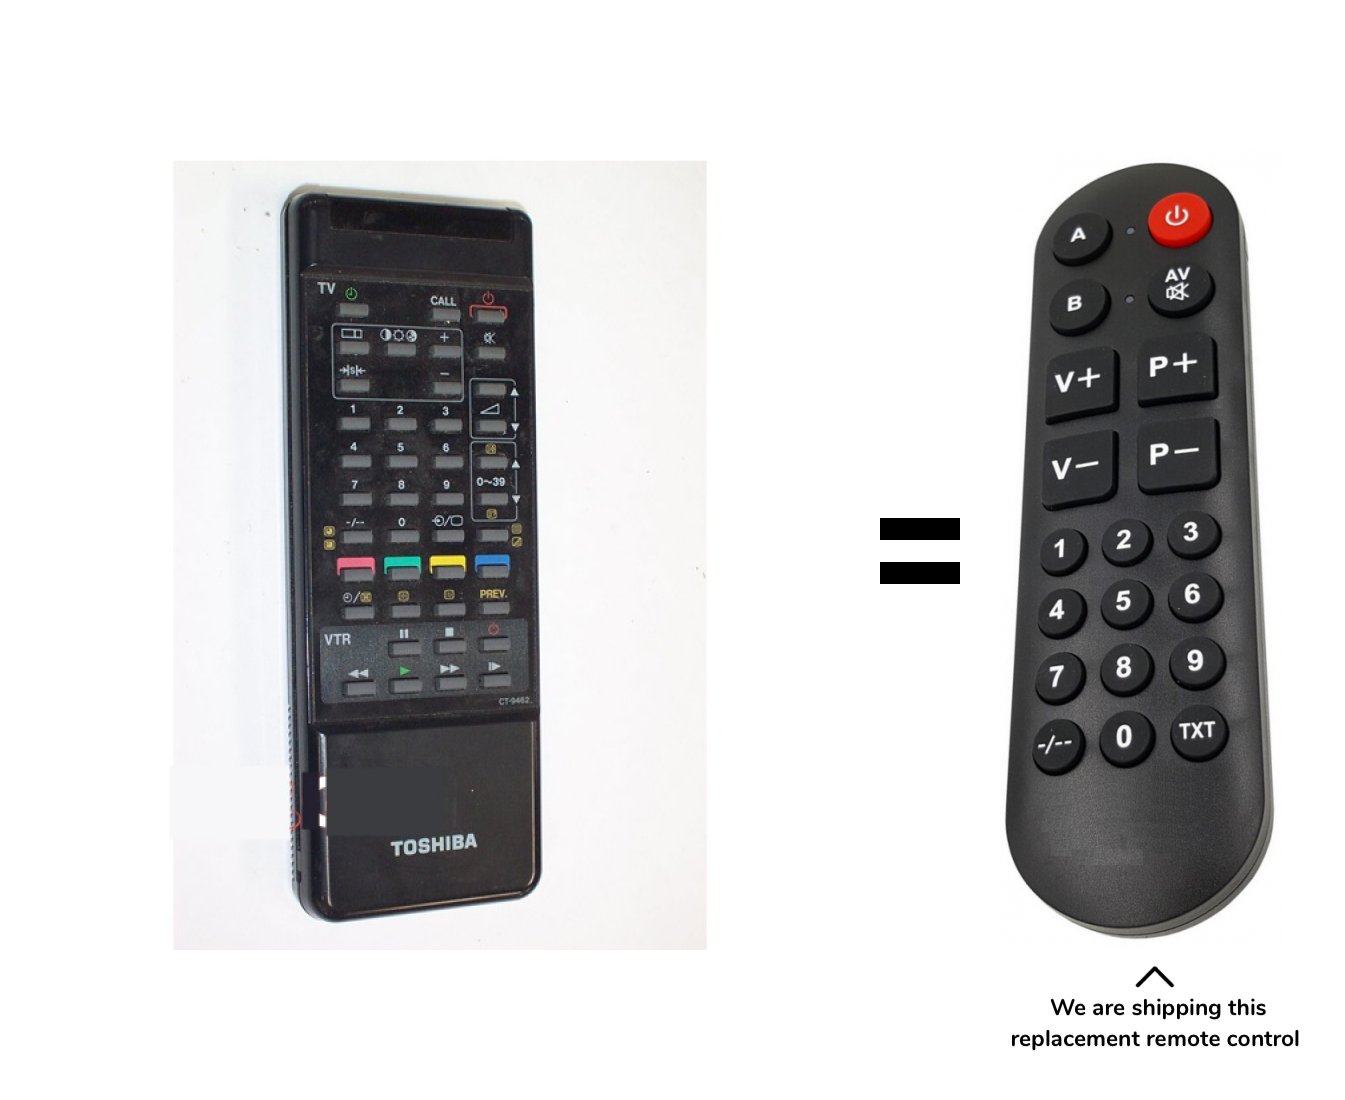 Toshiba 219X6M remote control for seniors